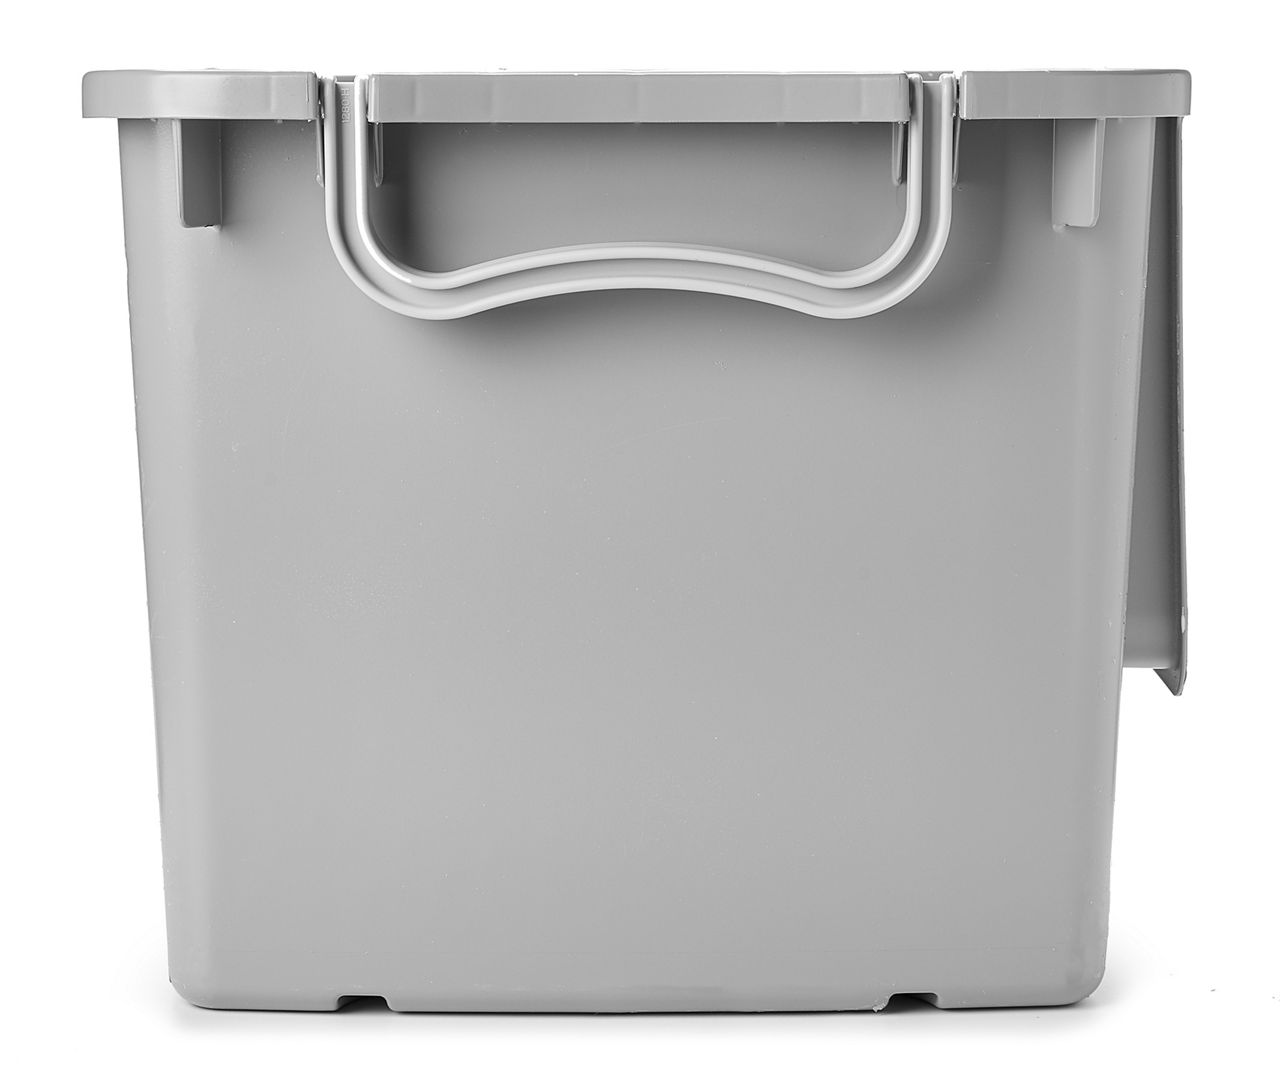 Sterilite Home Organization Stackable Open Storage Bin Container, Gray (24 Pack)